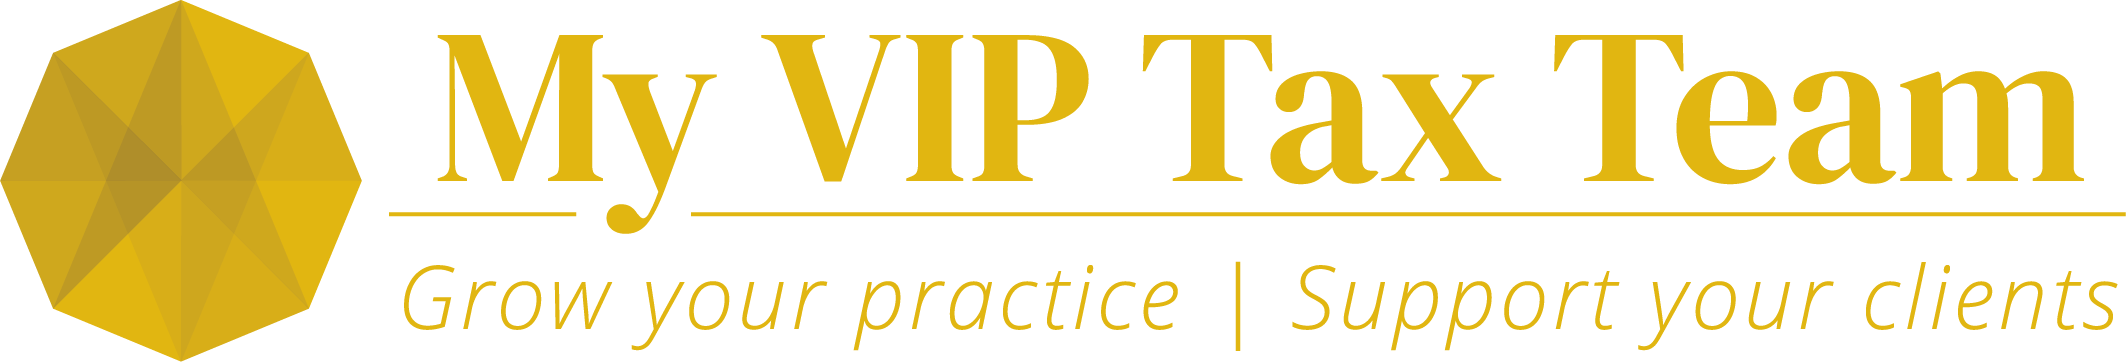 My VIP Tax Team Logo